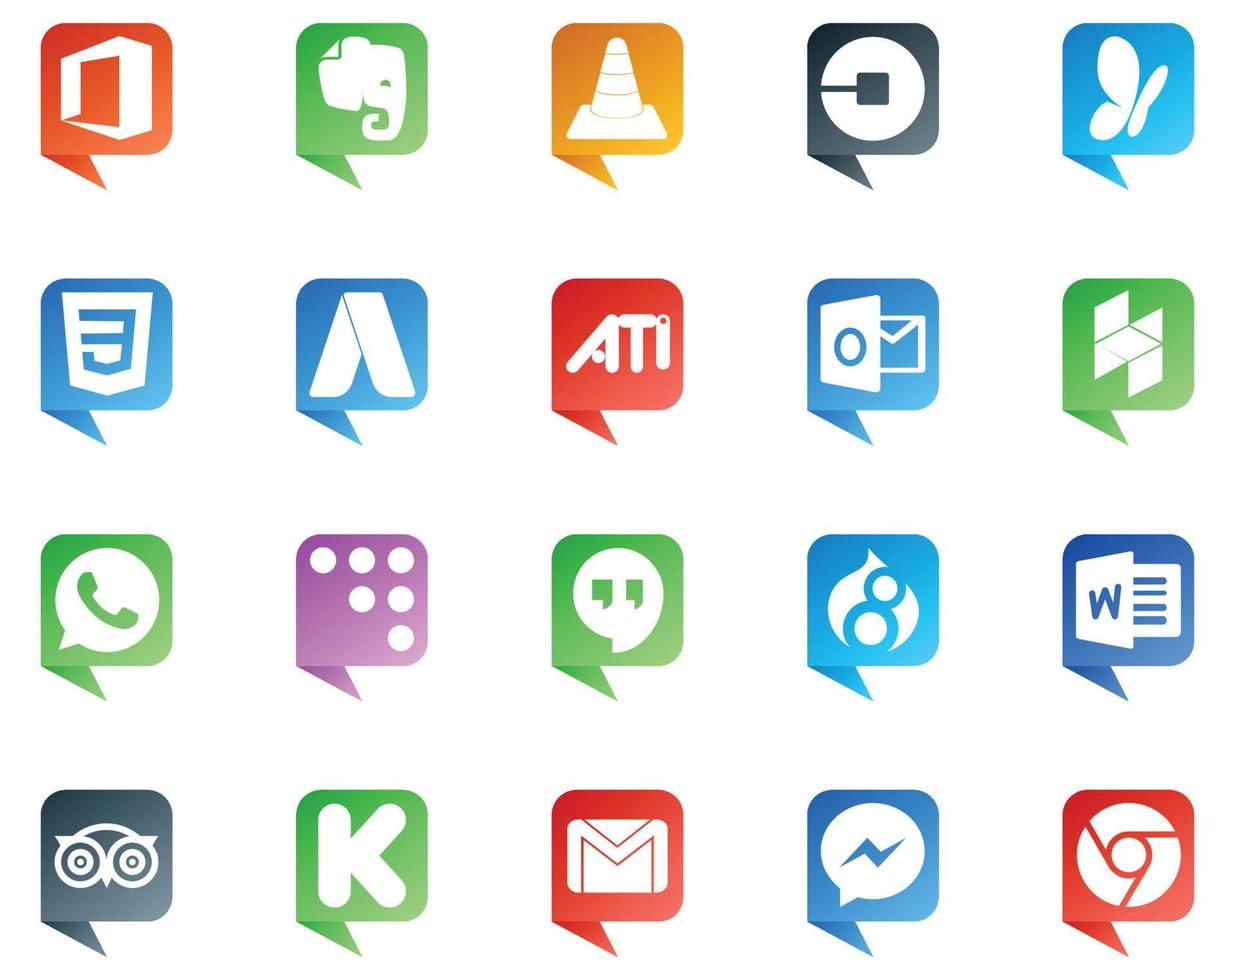 20 logo de style bulle de médias sociaux comme drupal coderwall msn whatsapp outlook vecteur